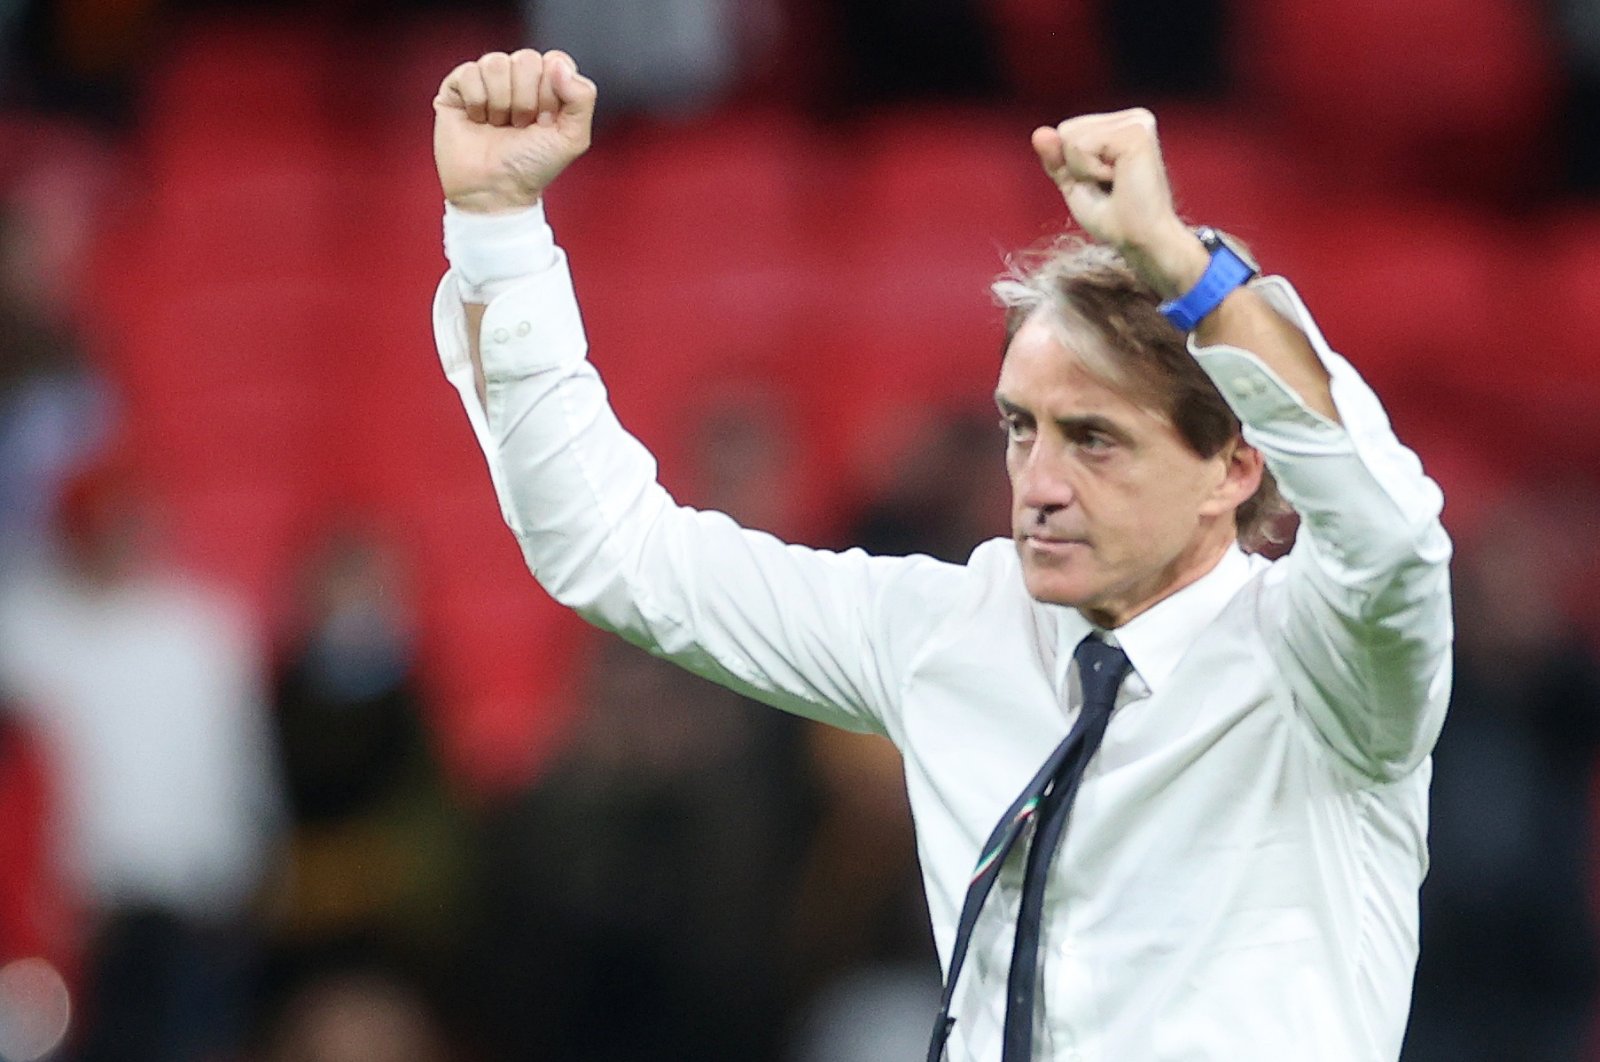 Italy coach Roberto Mancini celebrates after winning the Euro 2020 semifinal against Spain, Wembley Stadium, London, England, July 6, 2021. (Reuters Photo)